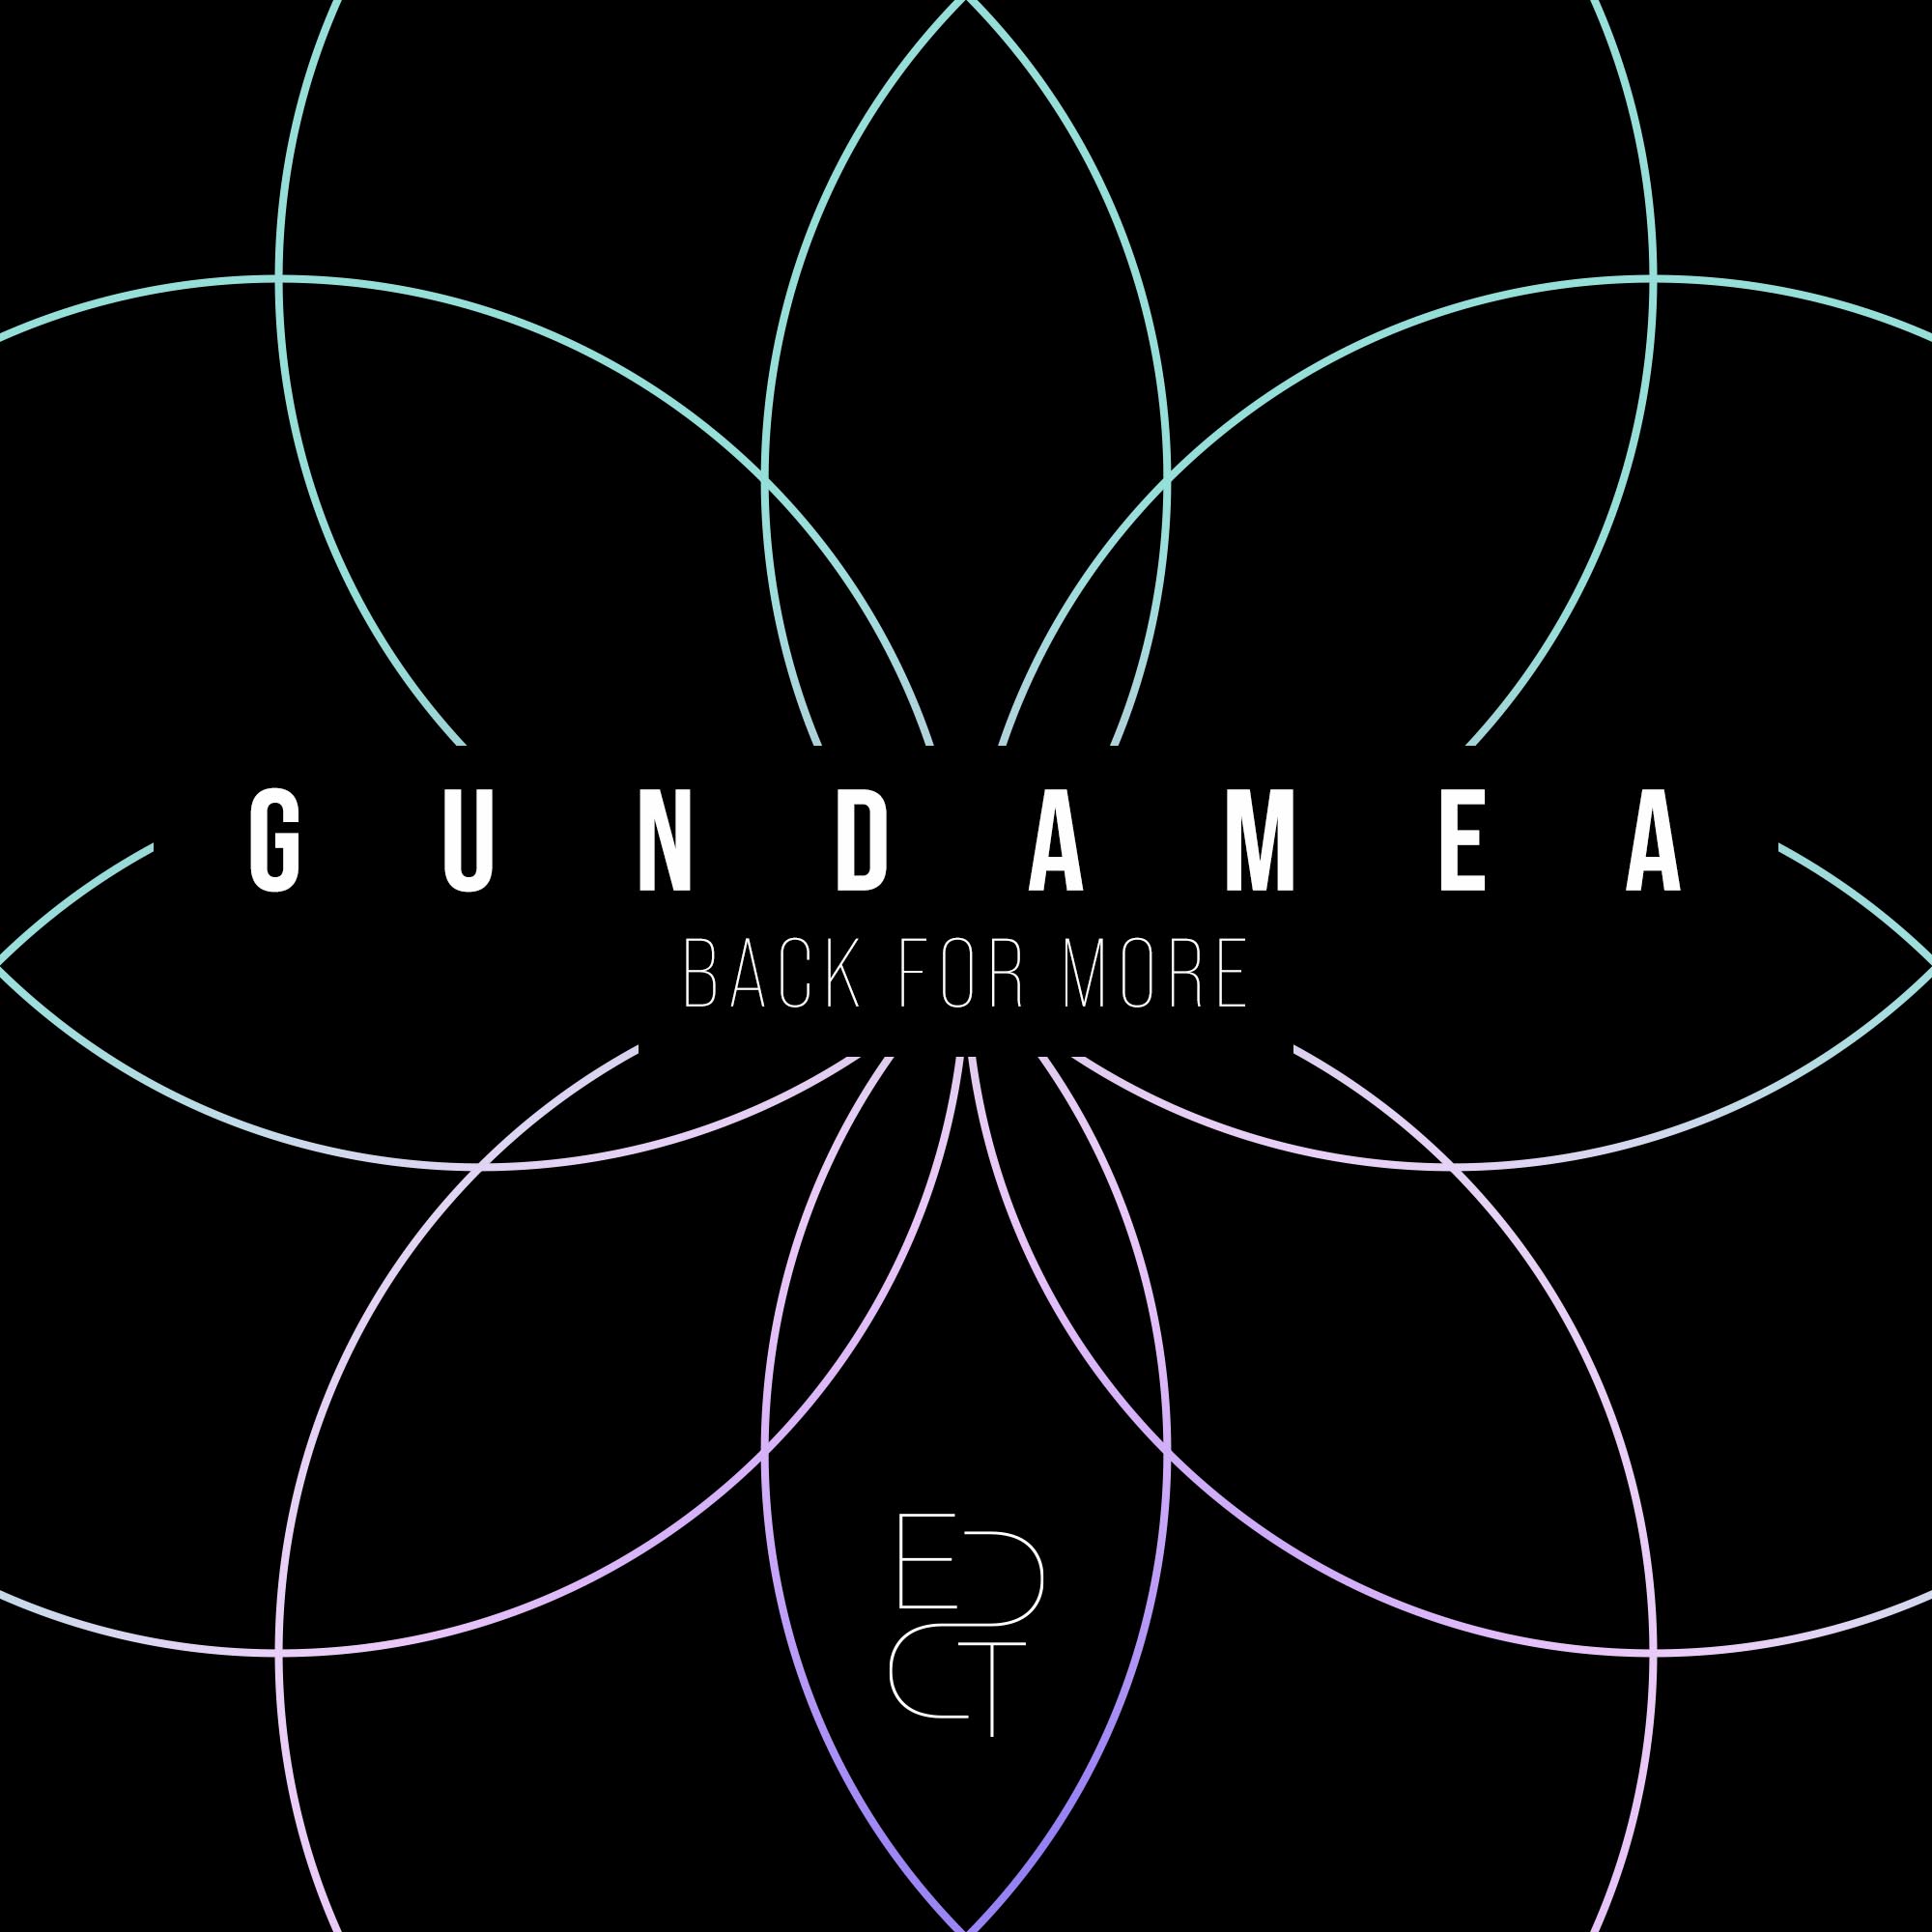 Gundamea presents Back For More on EDCT Music